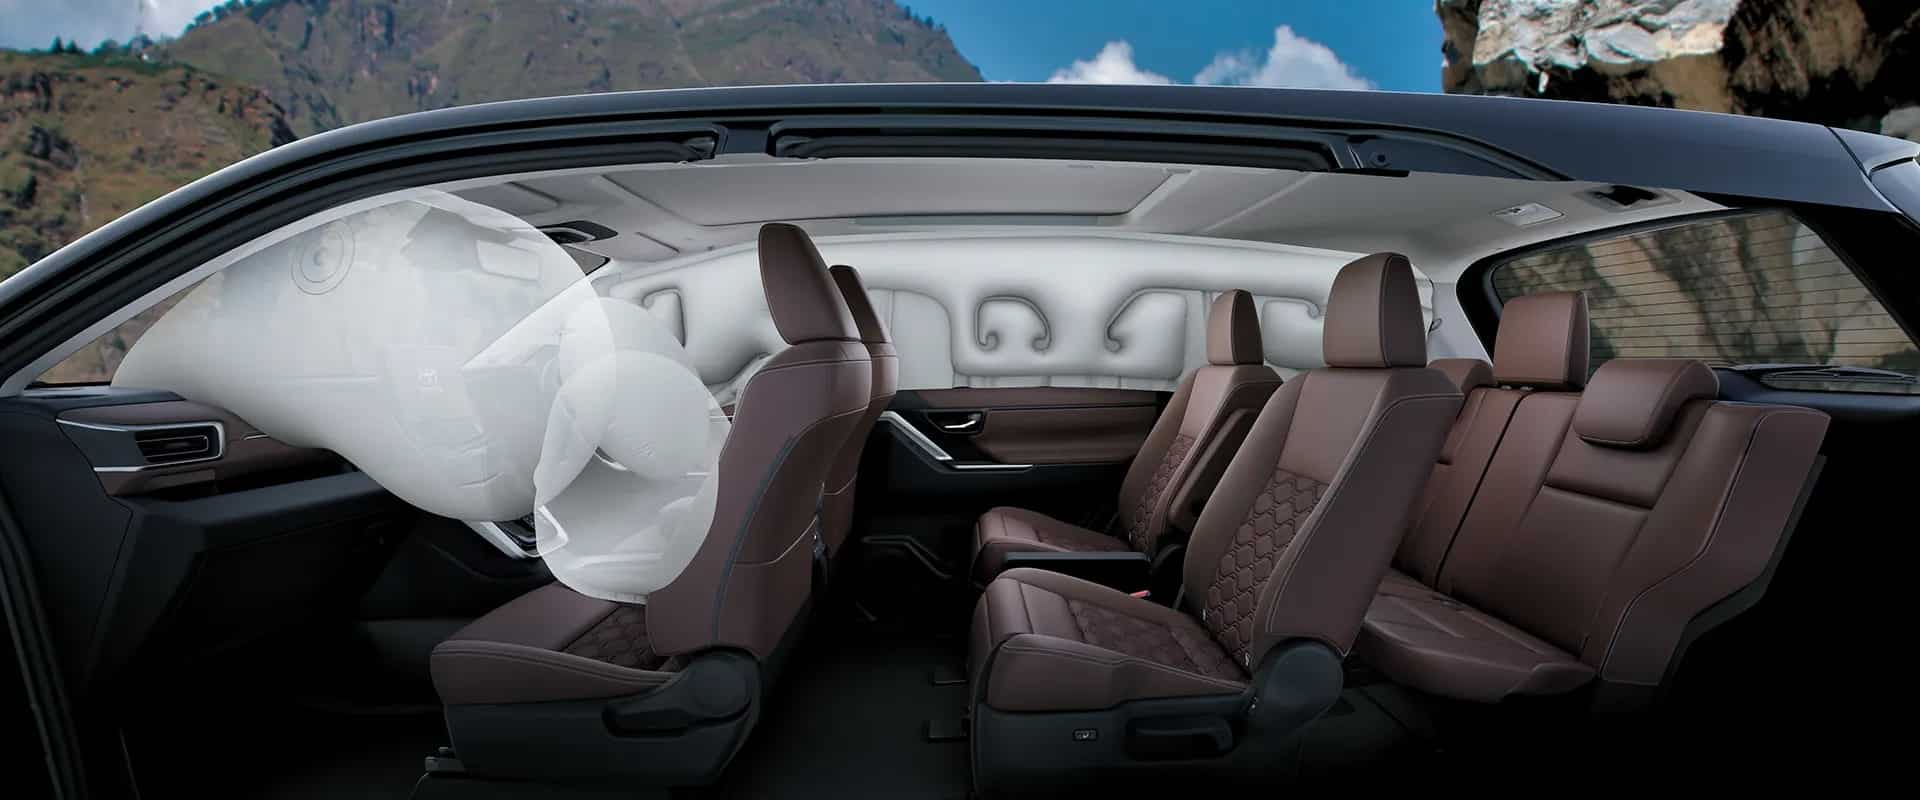 Toyota Innova Hycross: Safety Features